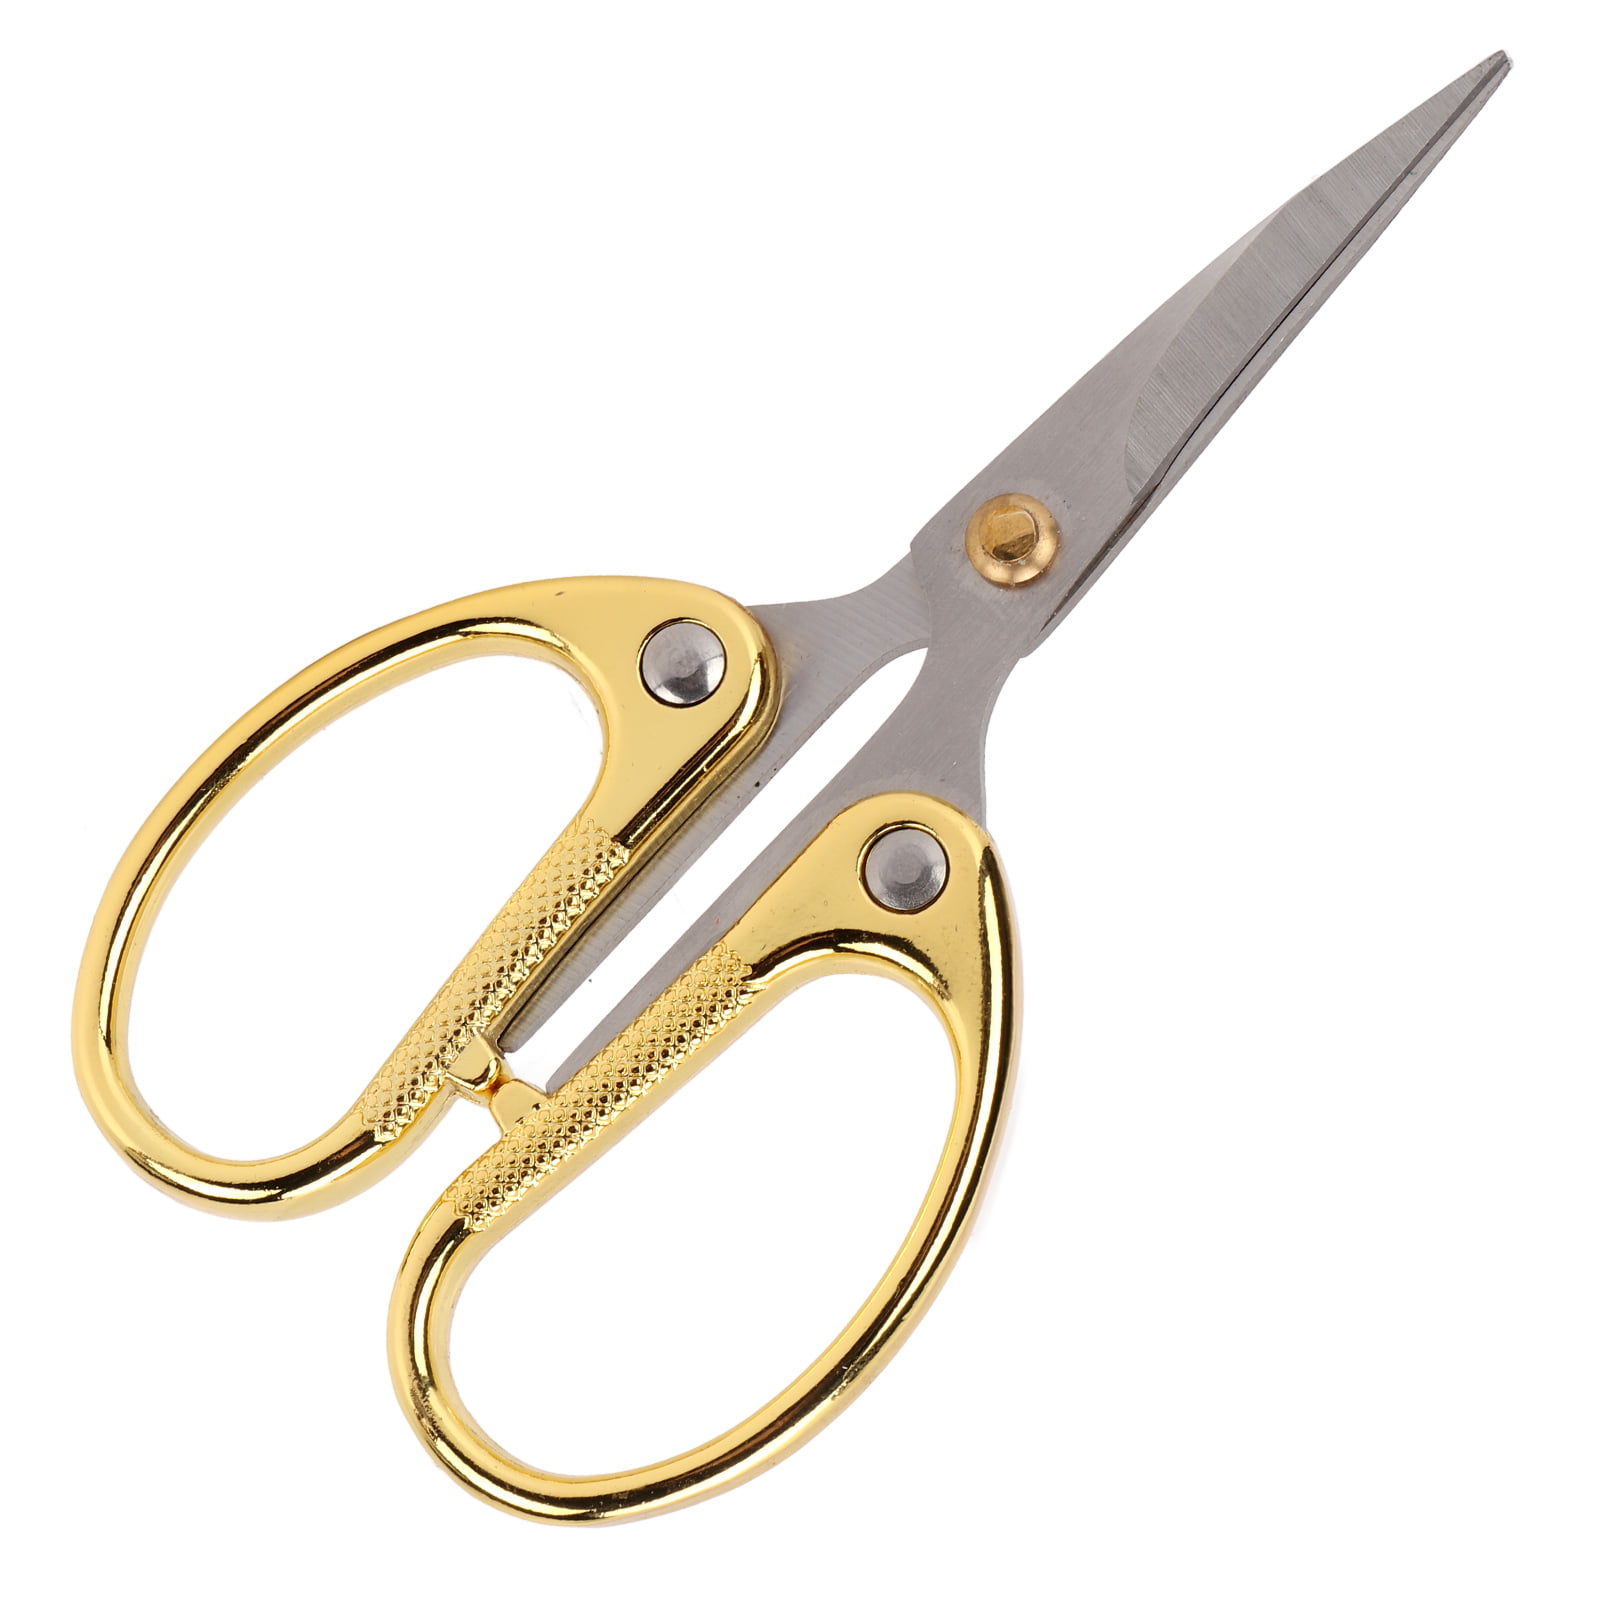 Bazic 8 Double Thumb Stainless Steel Scissors